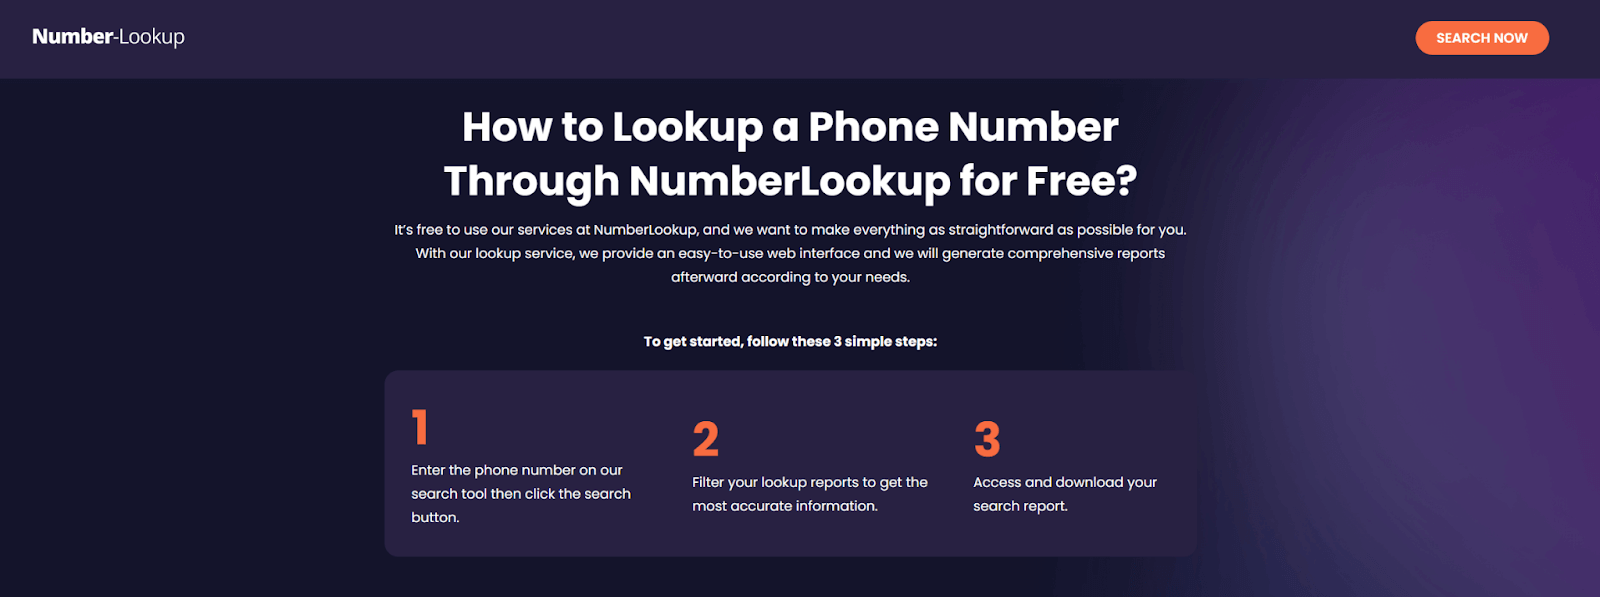 number-lookup.org